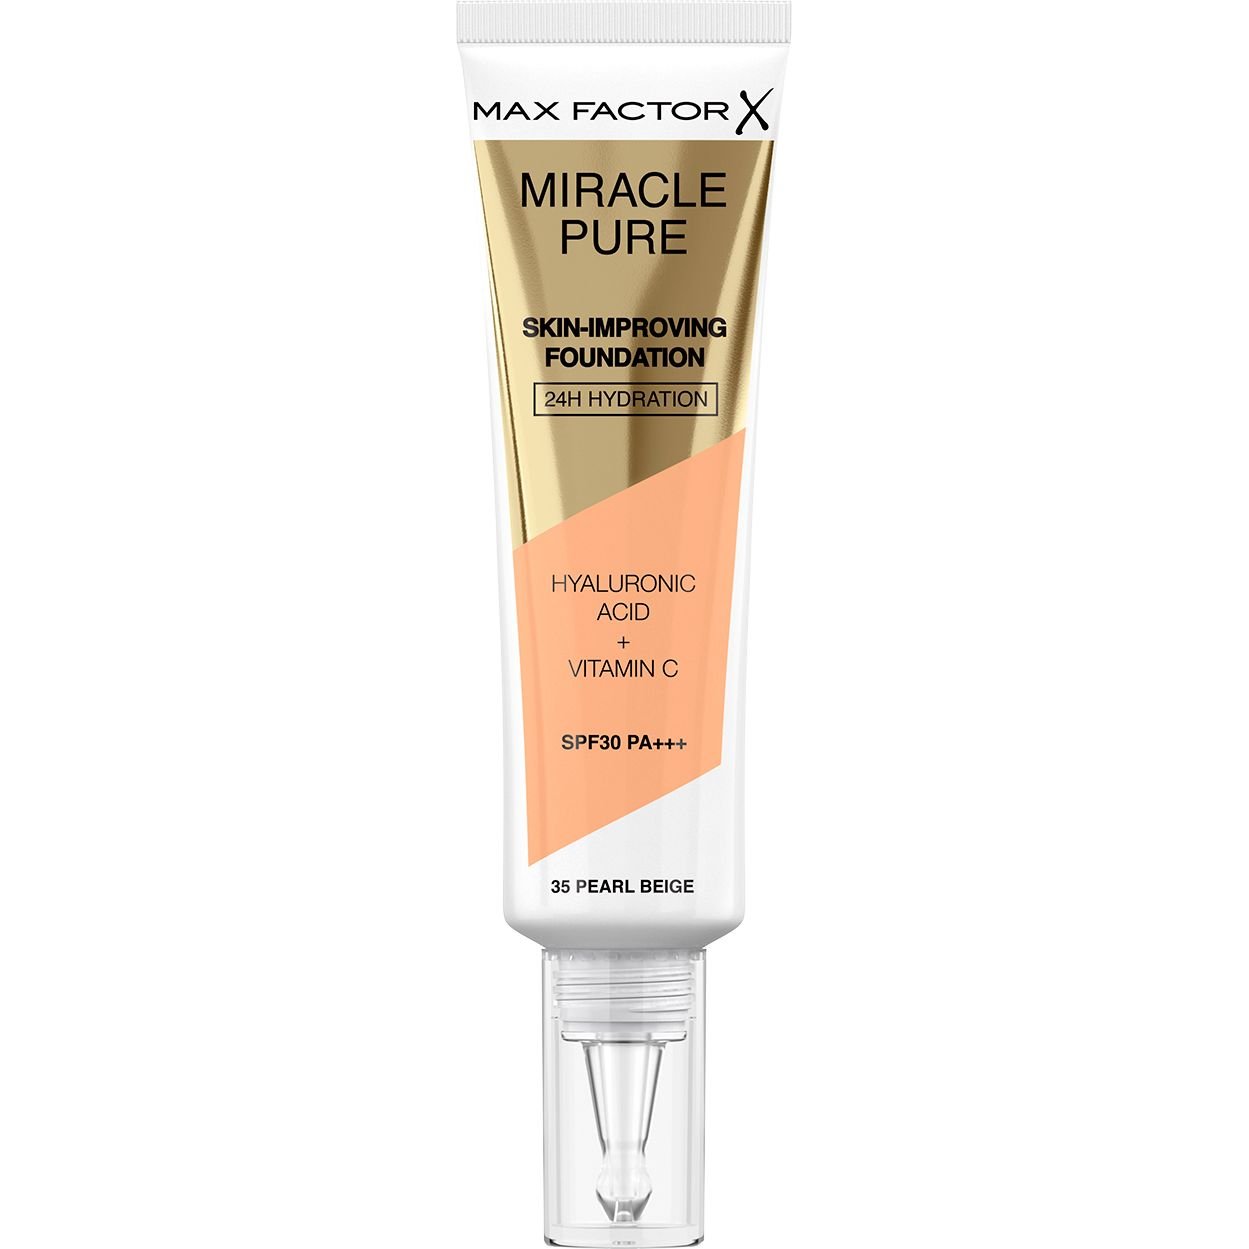 Тональная основа Max Factor Miracle Pure Skin-Improving Foundation SPF30 тон 035 (Pearl Beige) 30 мл - фото 1